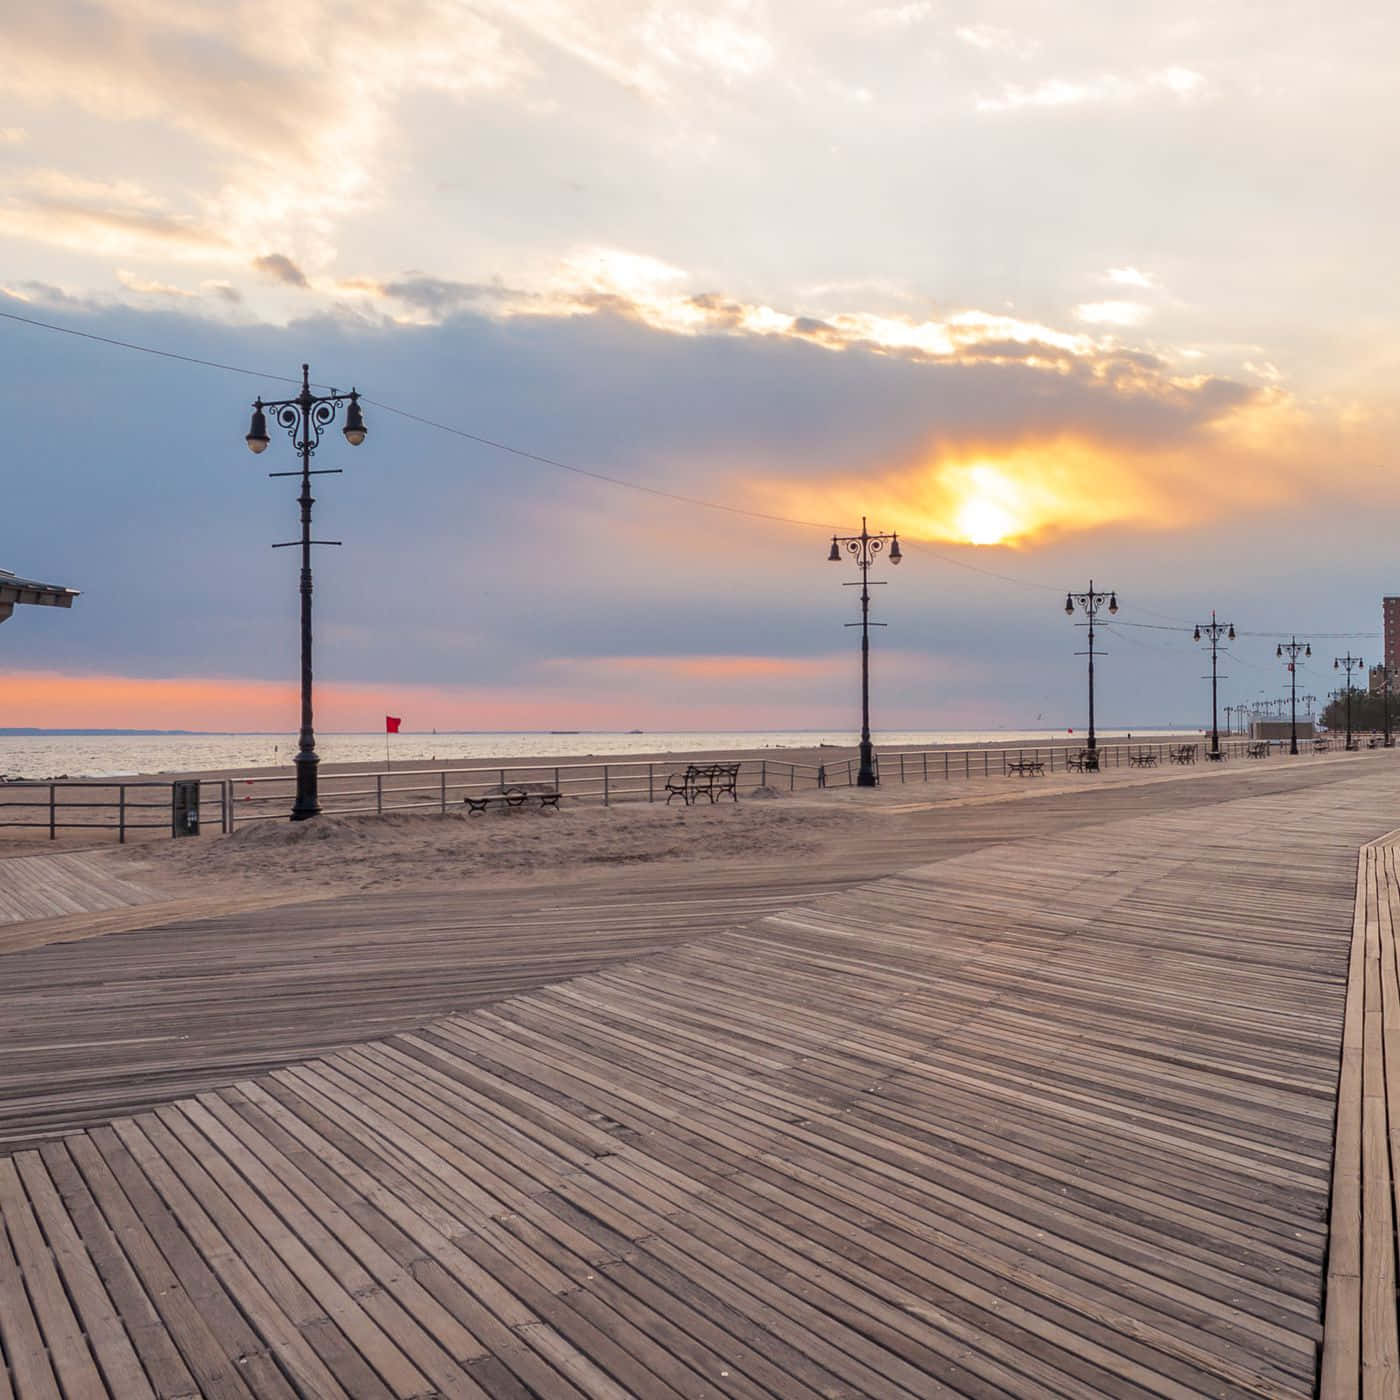 Take a stroll down the Boardwalk and enjoy calming ocean views